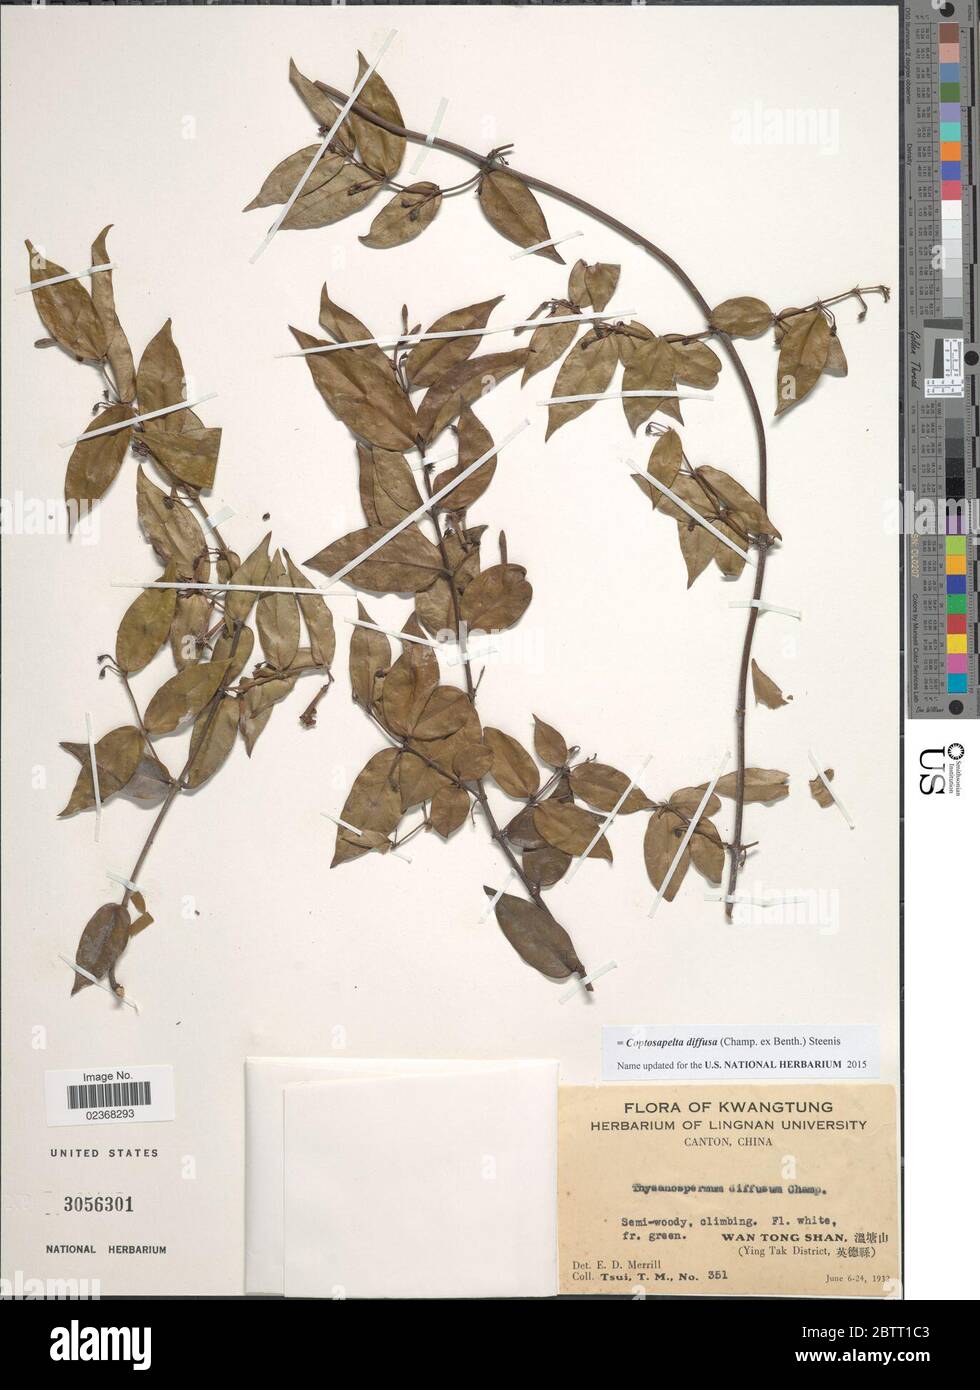 Coptosapelta diffusa Champ ex Benth Steenis. Stock Photo